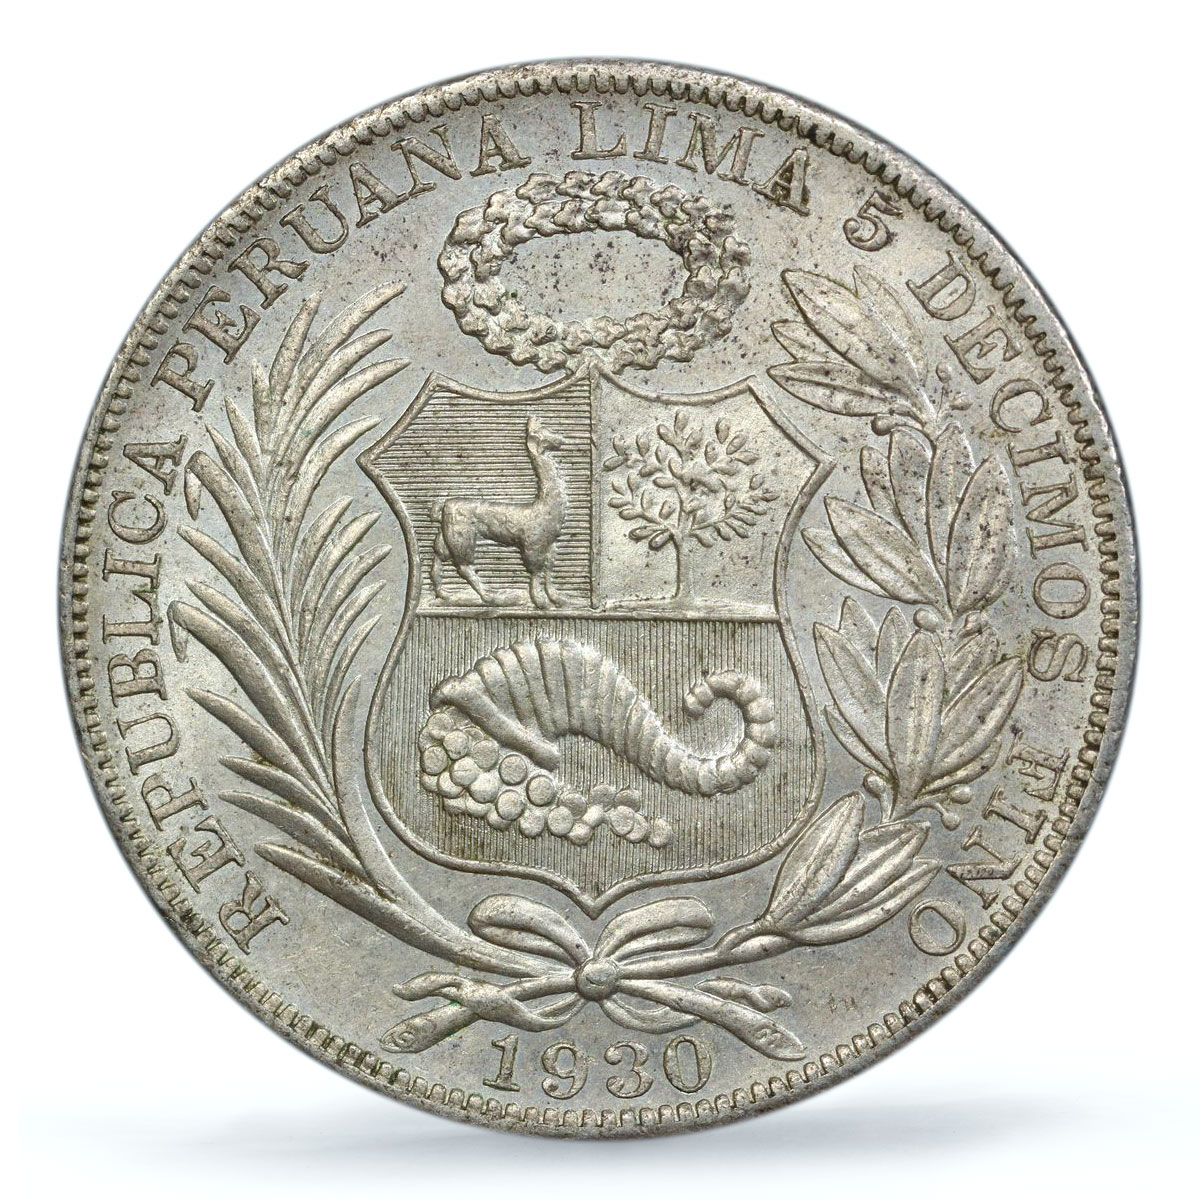 Peru 1 sol Regular Coinage Liberty Libertad KM-218.2 MS62 PCGS silver coin 1930